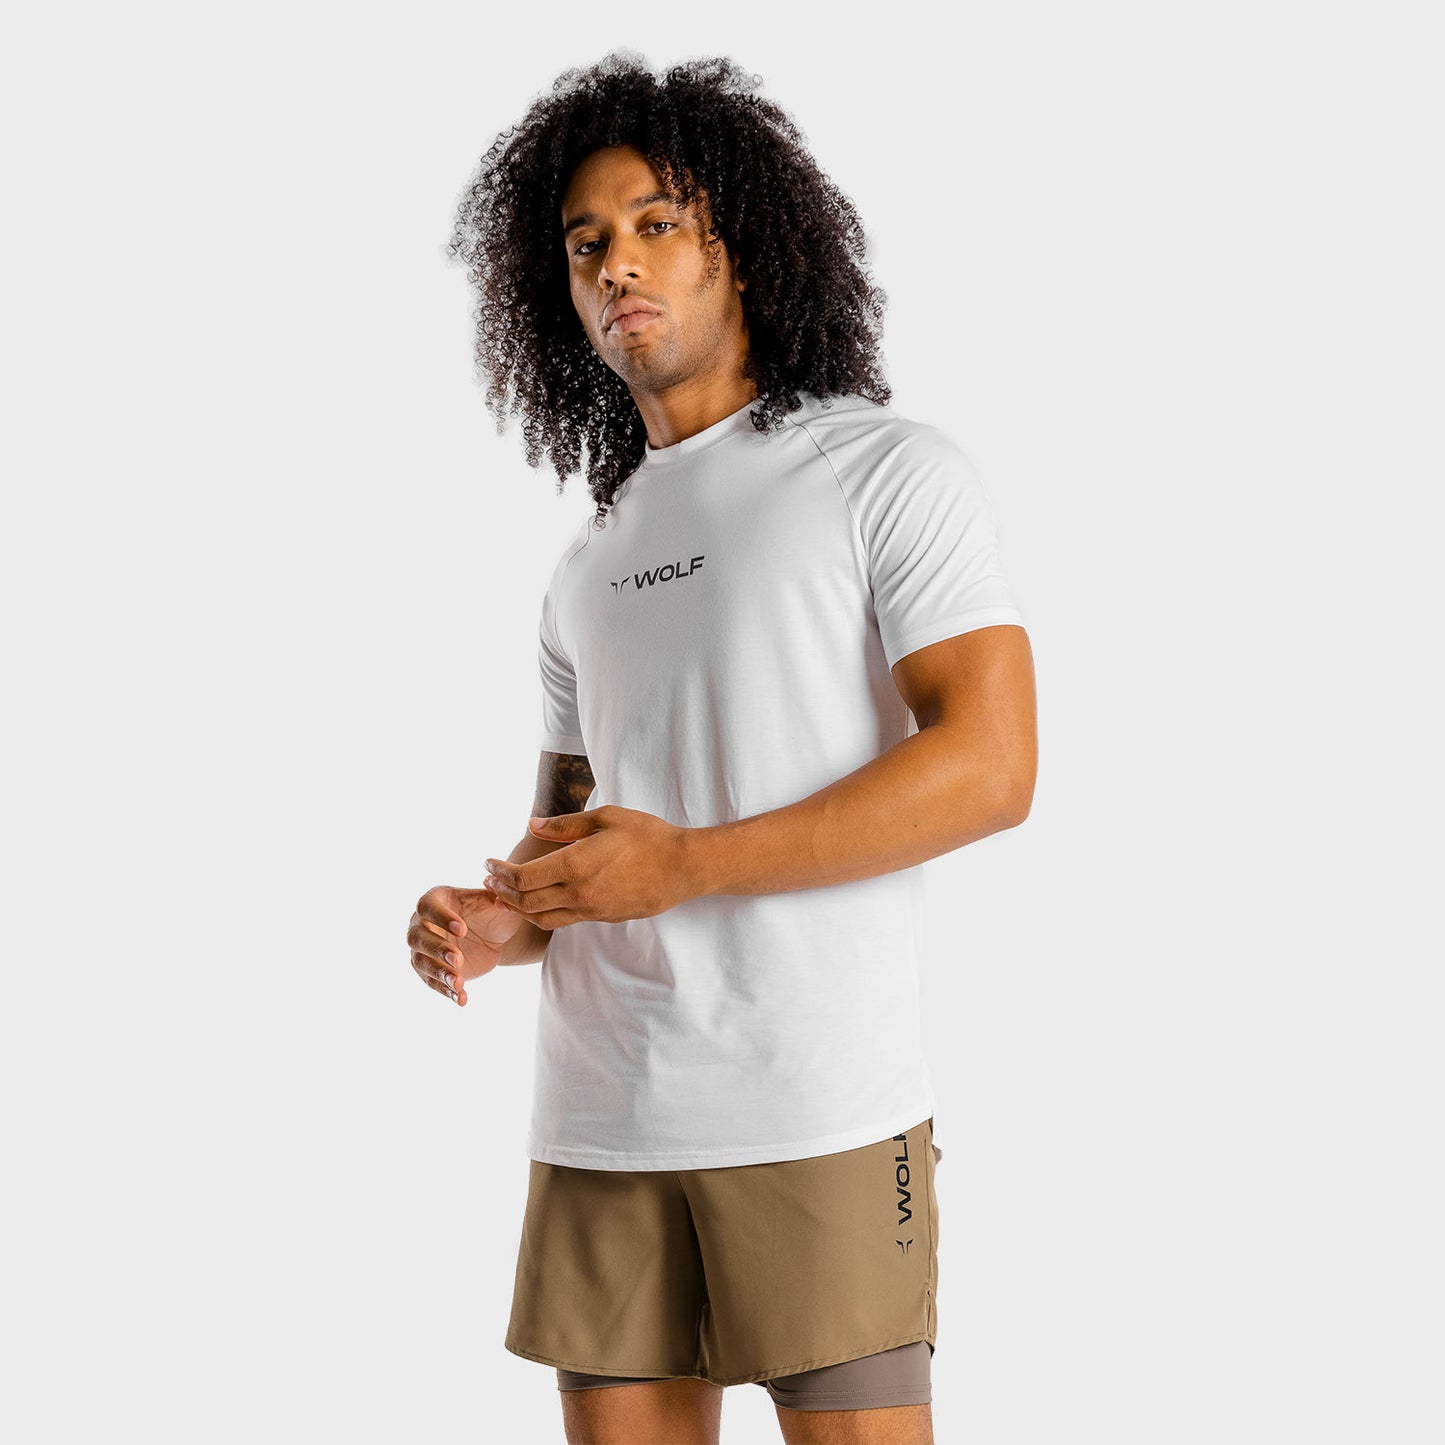 squatwolf-workout-shirts-for-men-primal-men-tee-white-gym-wear